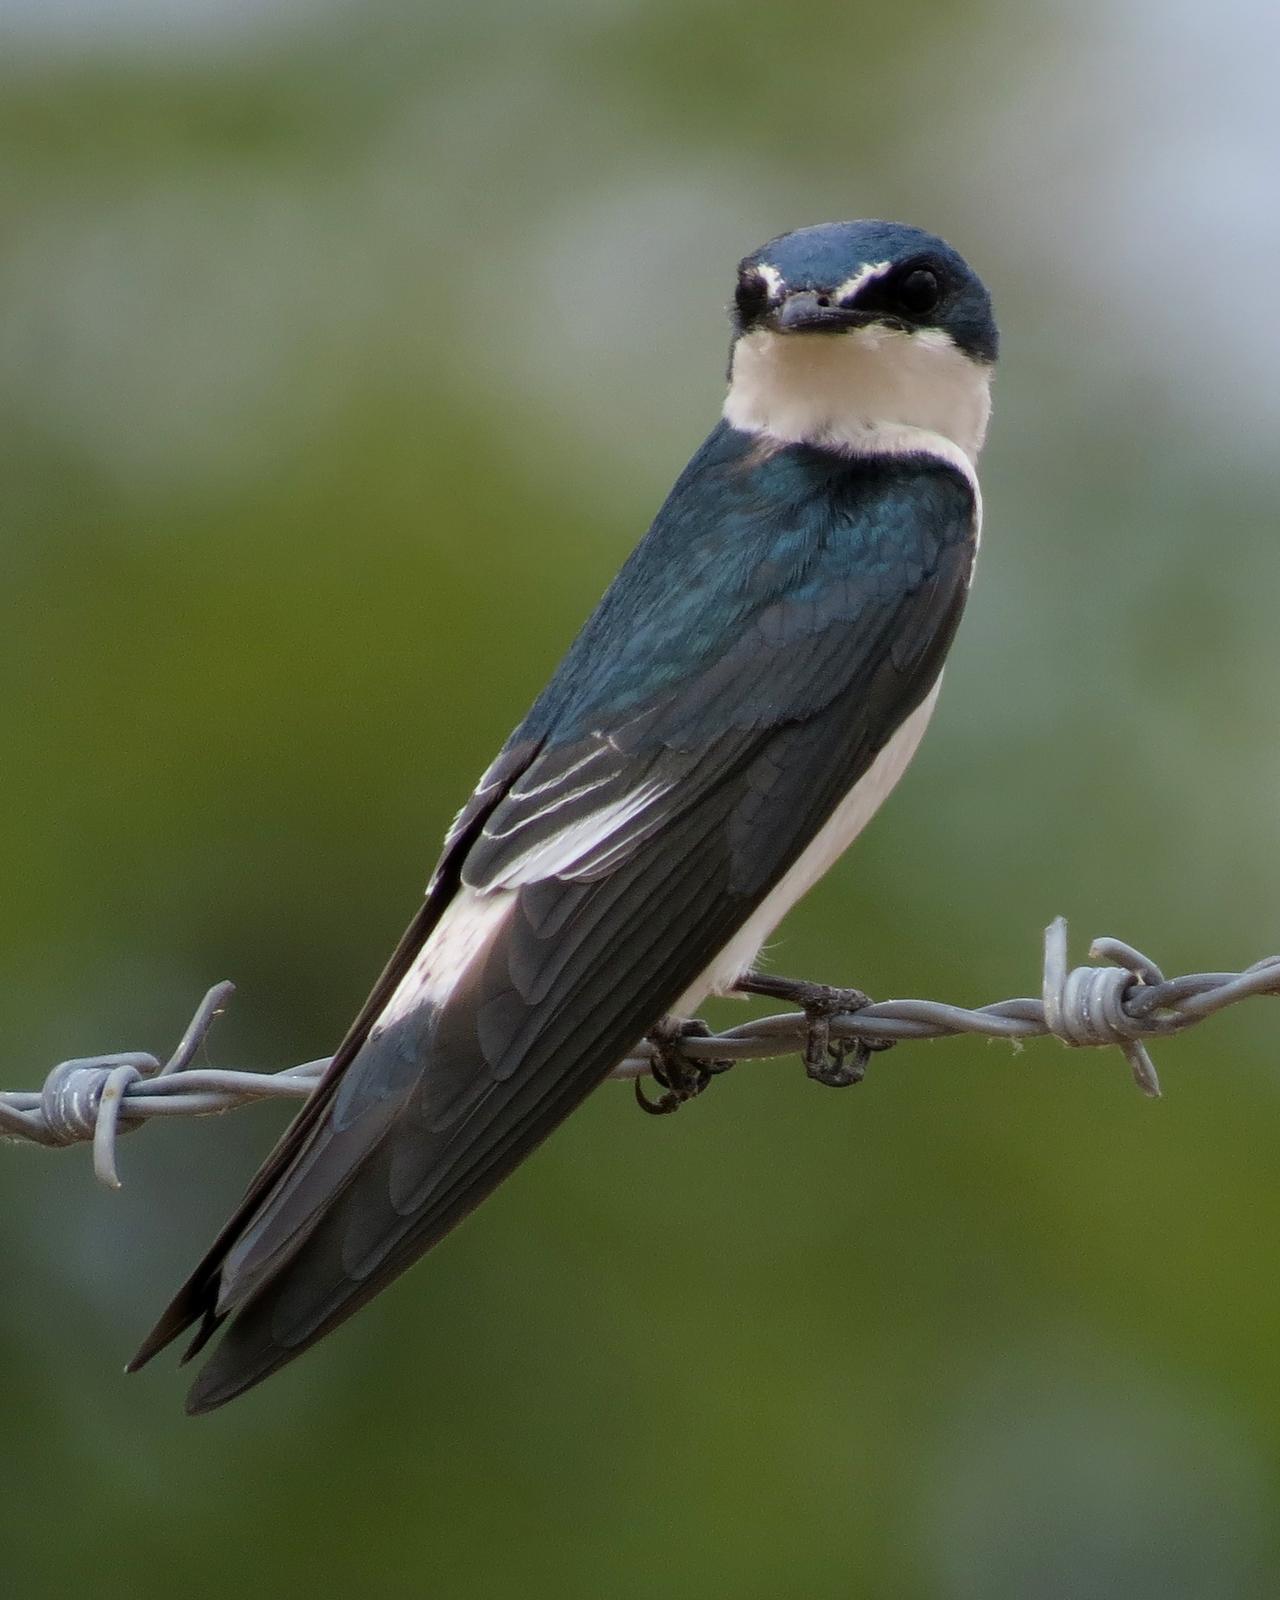 Mangrove Swallow Photo by John van Dort